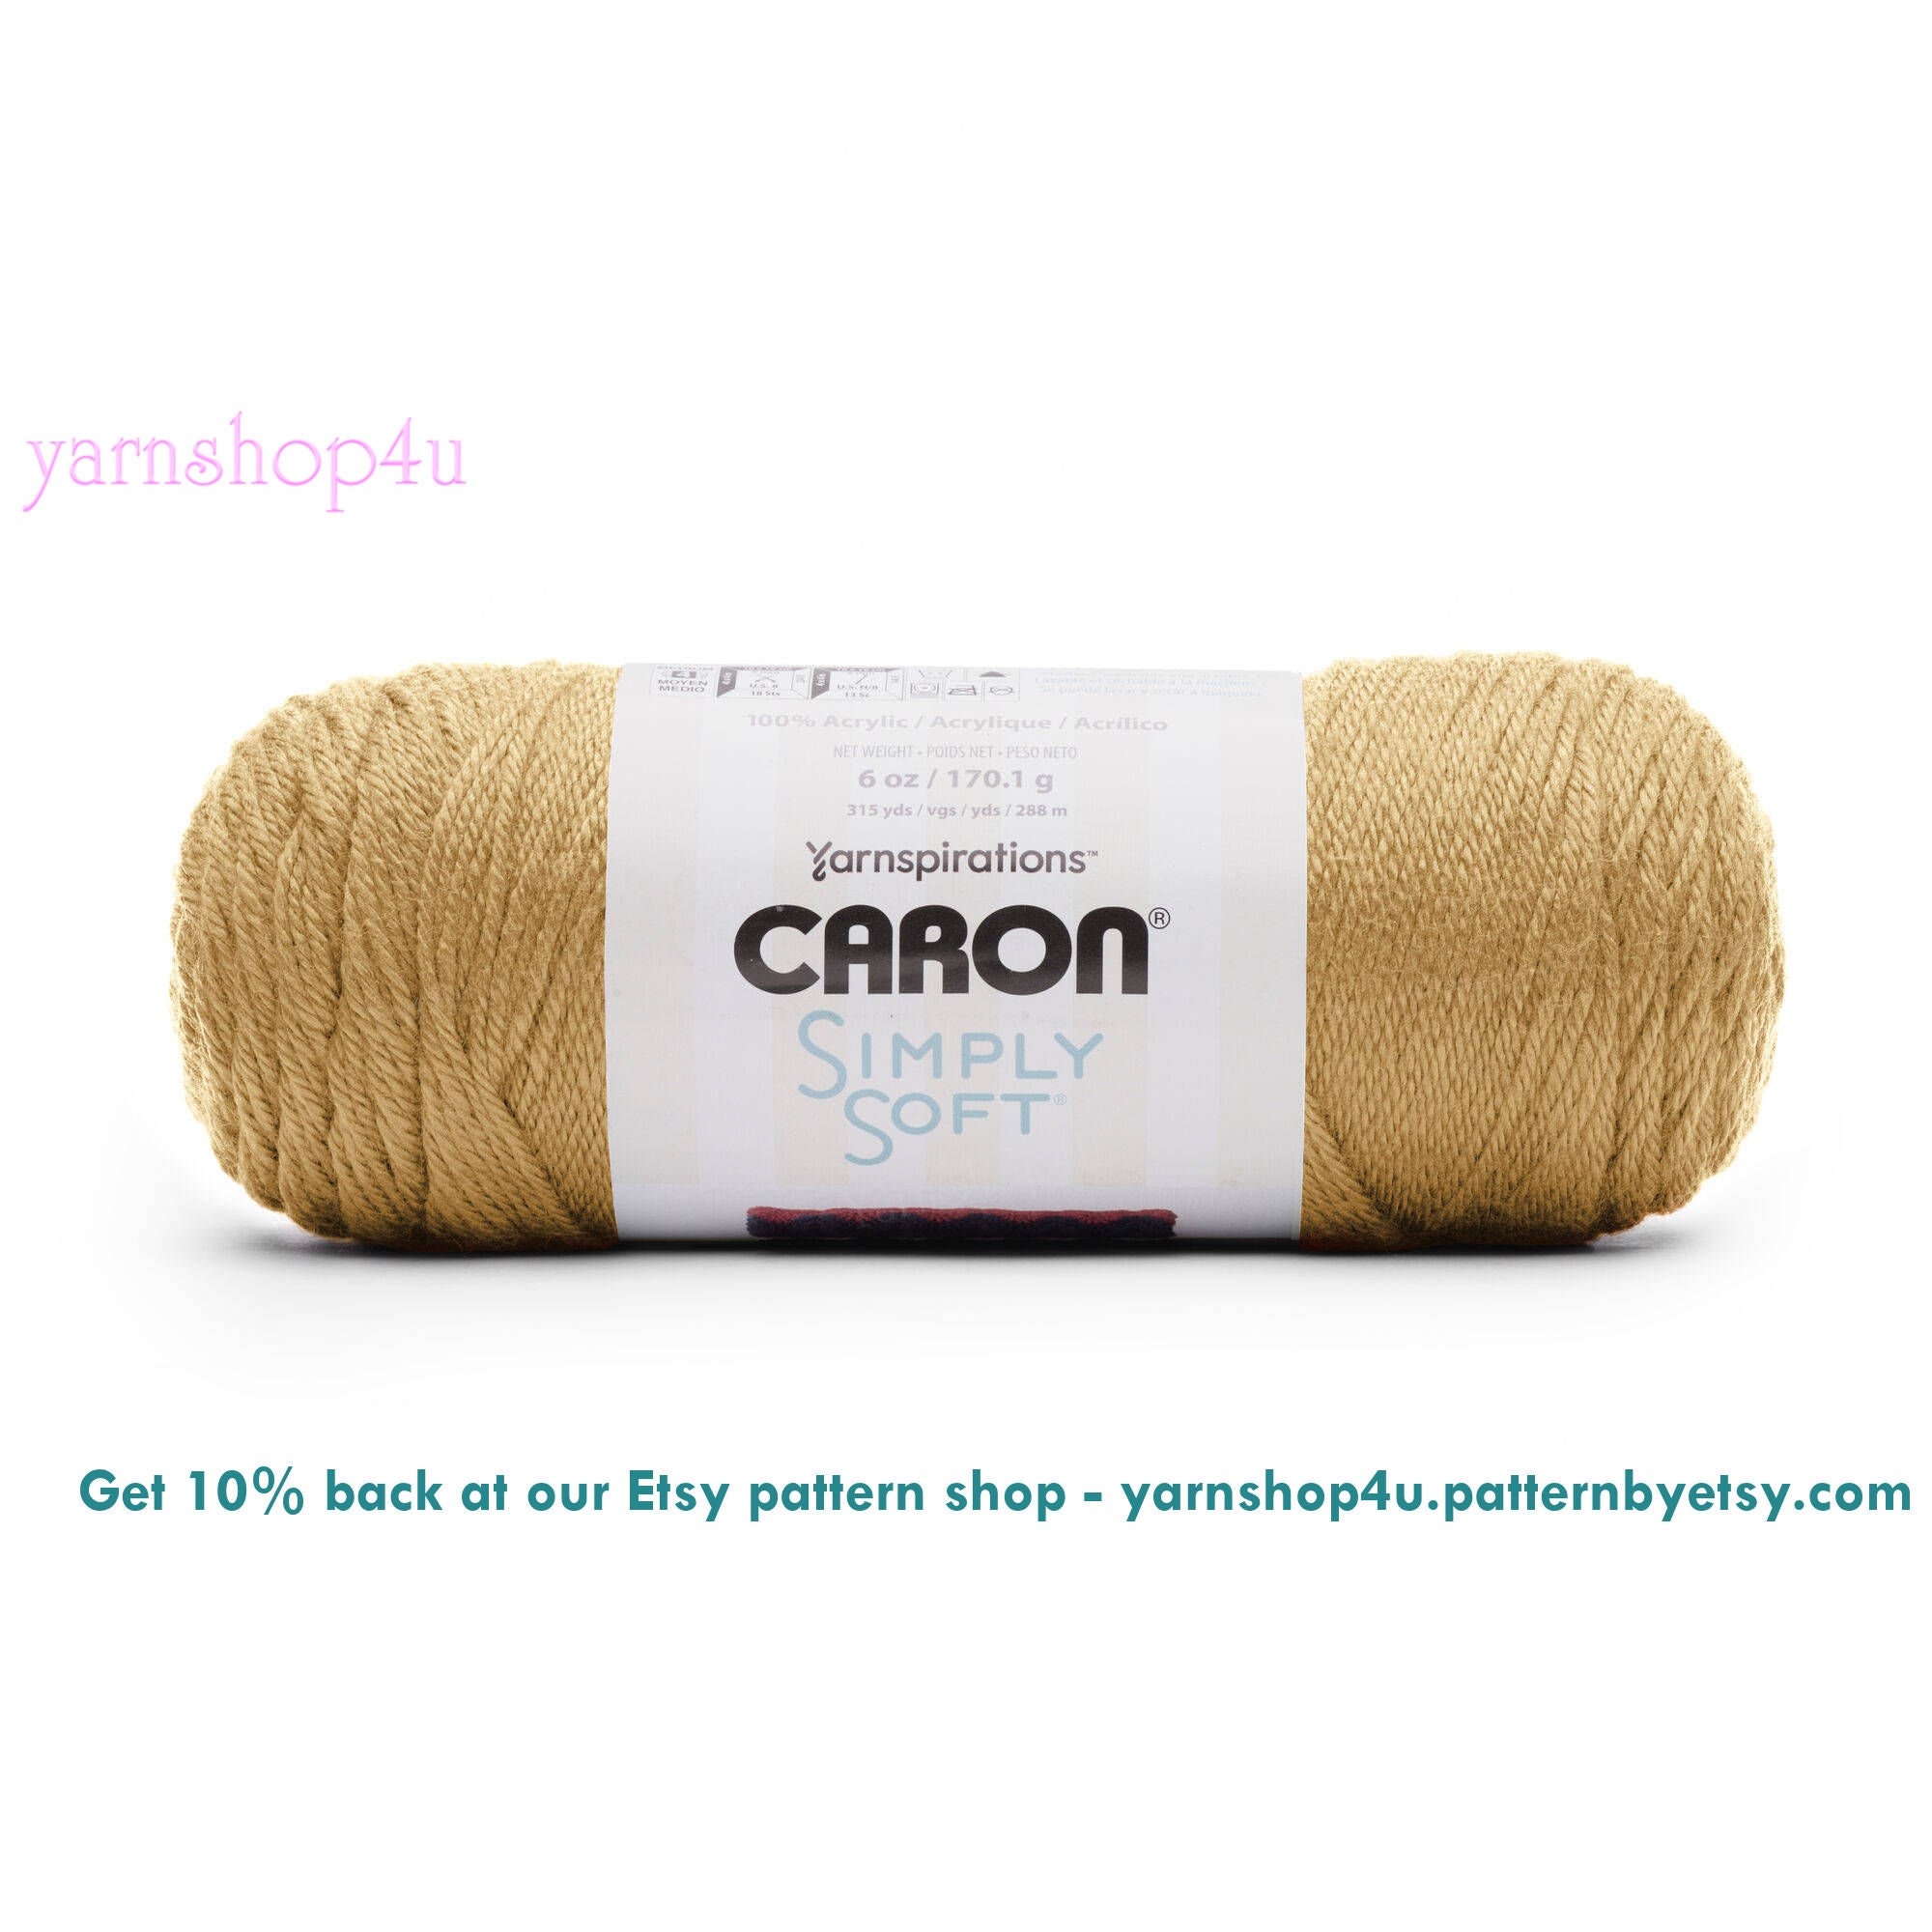 2-pack Autumn Maize Caron Simply Soft Yarn Solids Bulk Buy